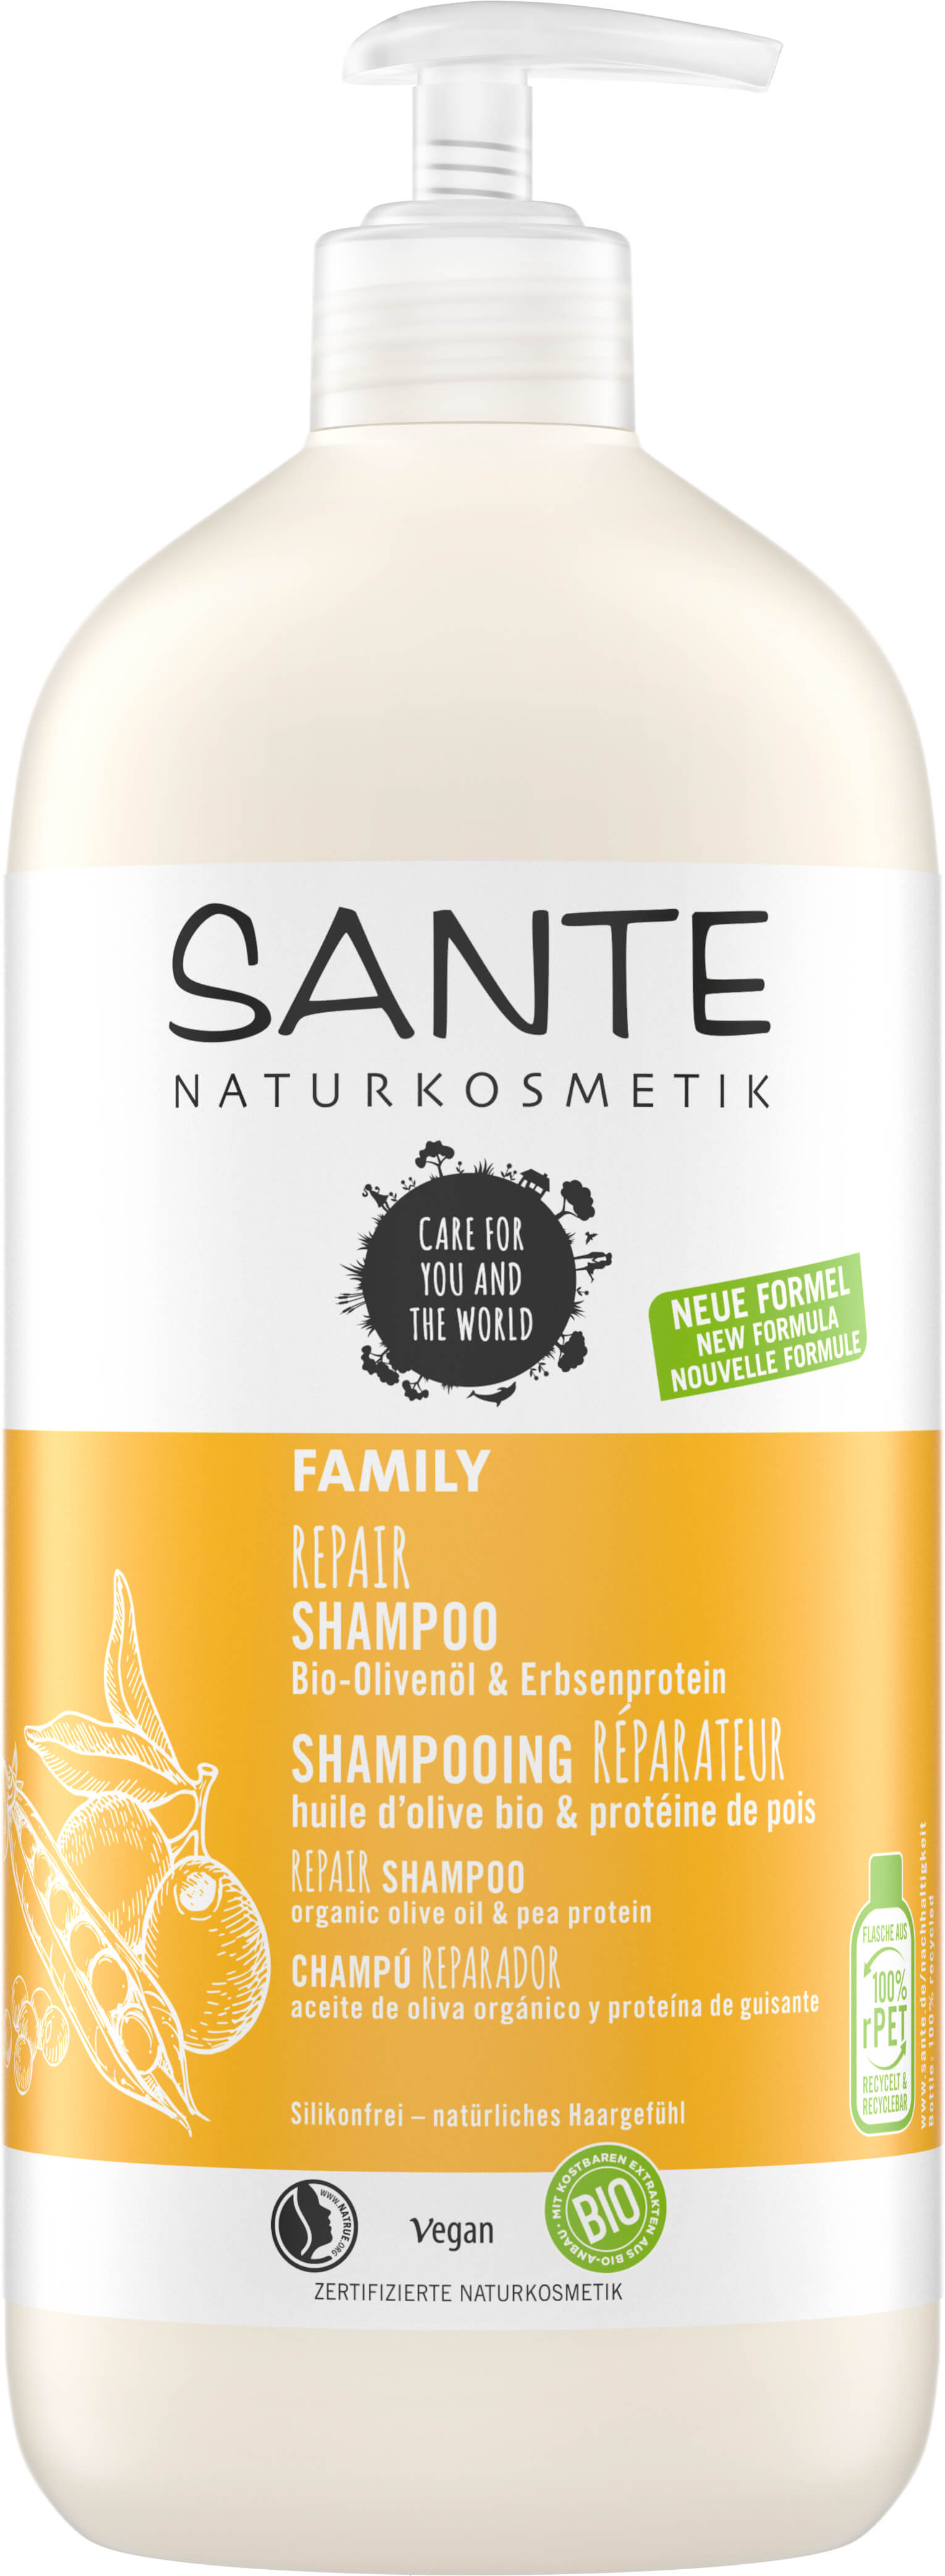 Repair Shampoo Bio-Olivenöl & | Naturkosmetik Erbsenprotein SANTE